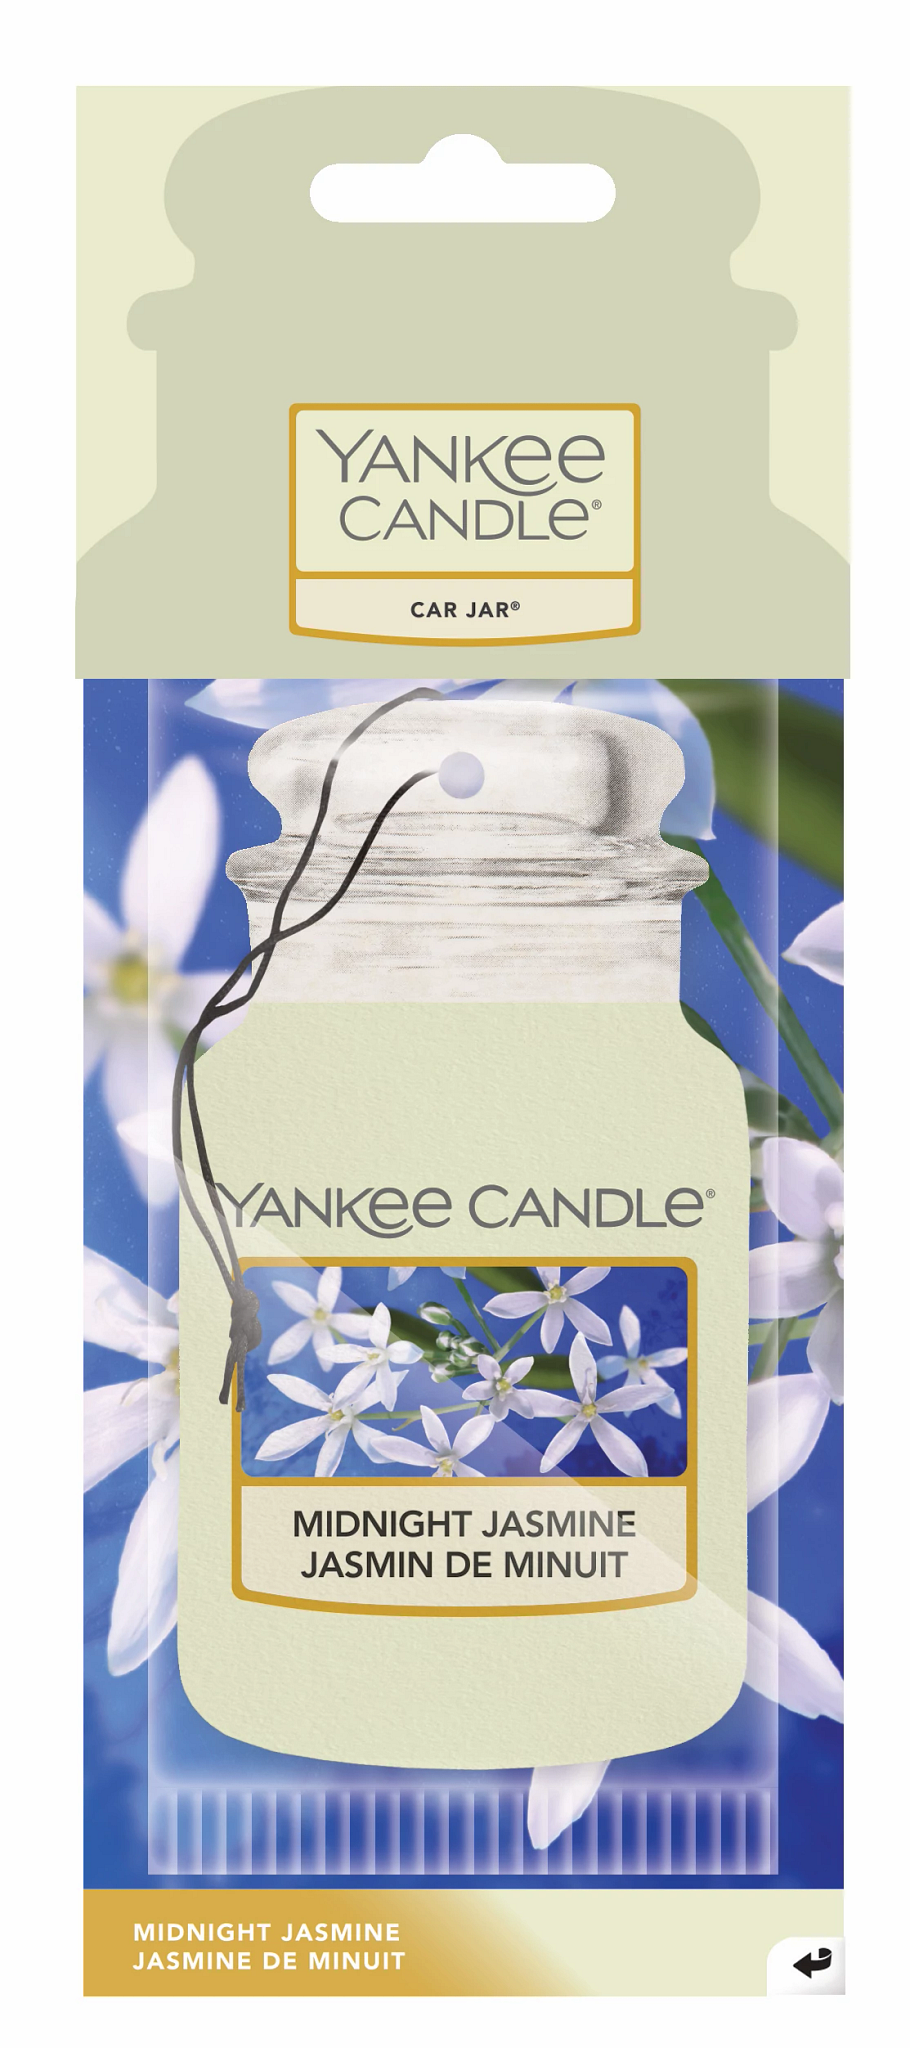 Yankee Candle - Car Jar Midnight Jasmine